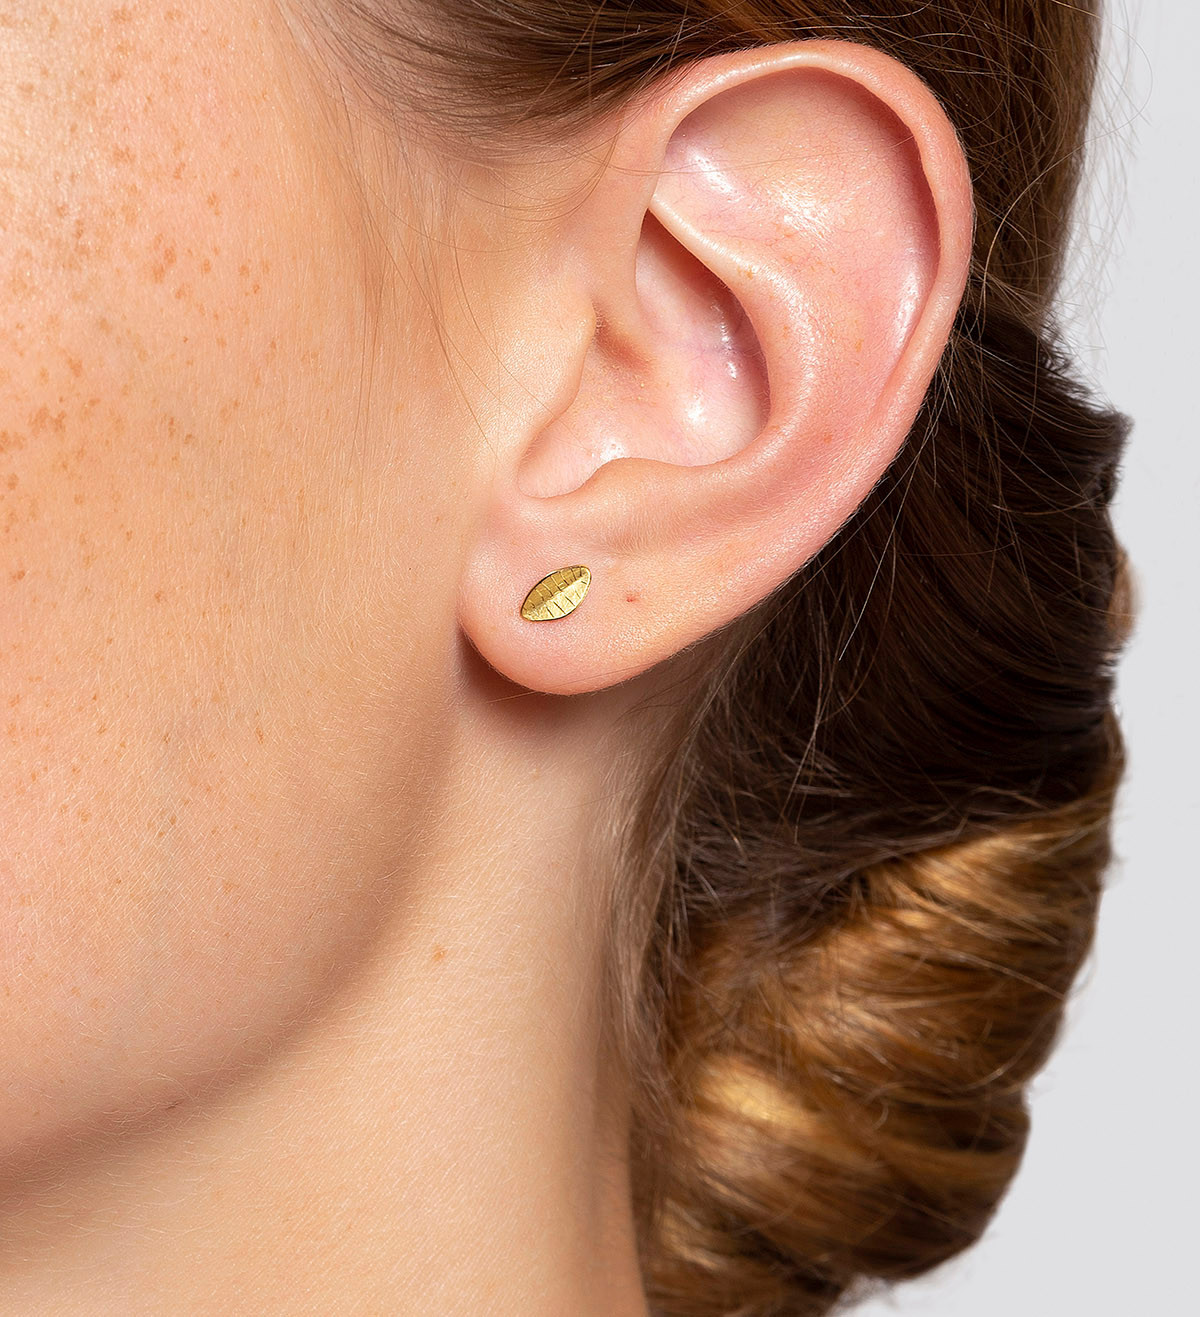 18k gold earrings Baladre 7mm